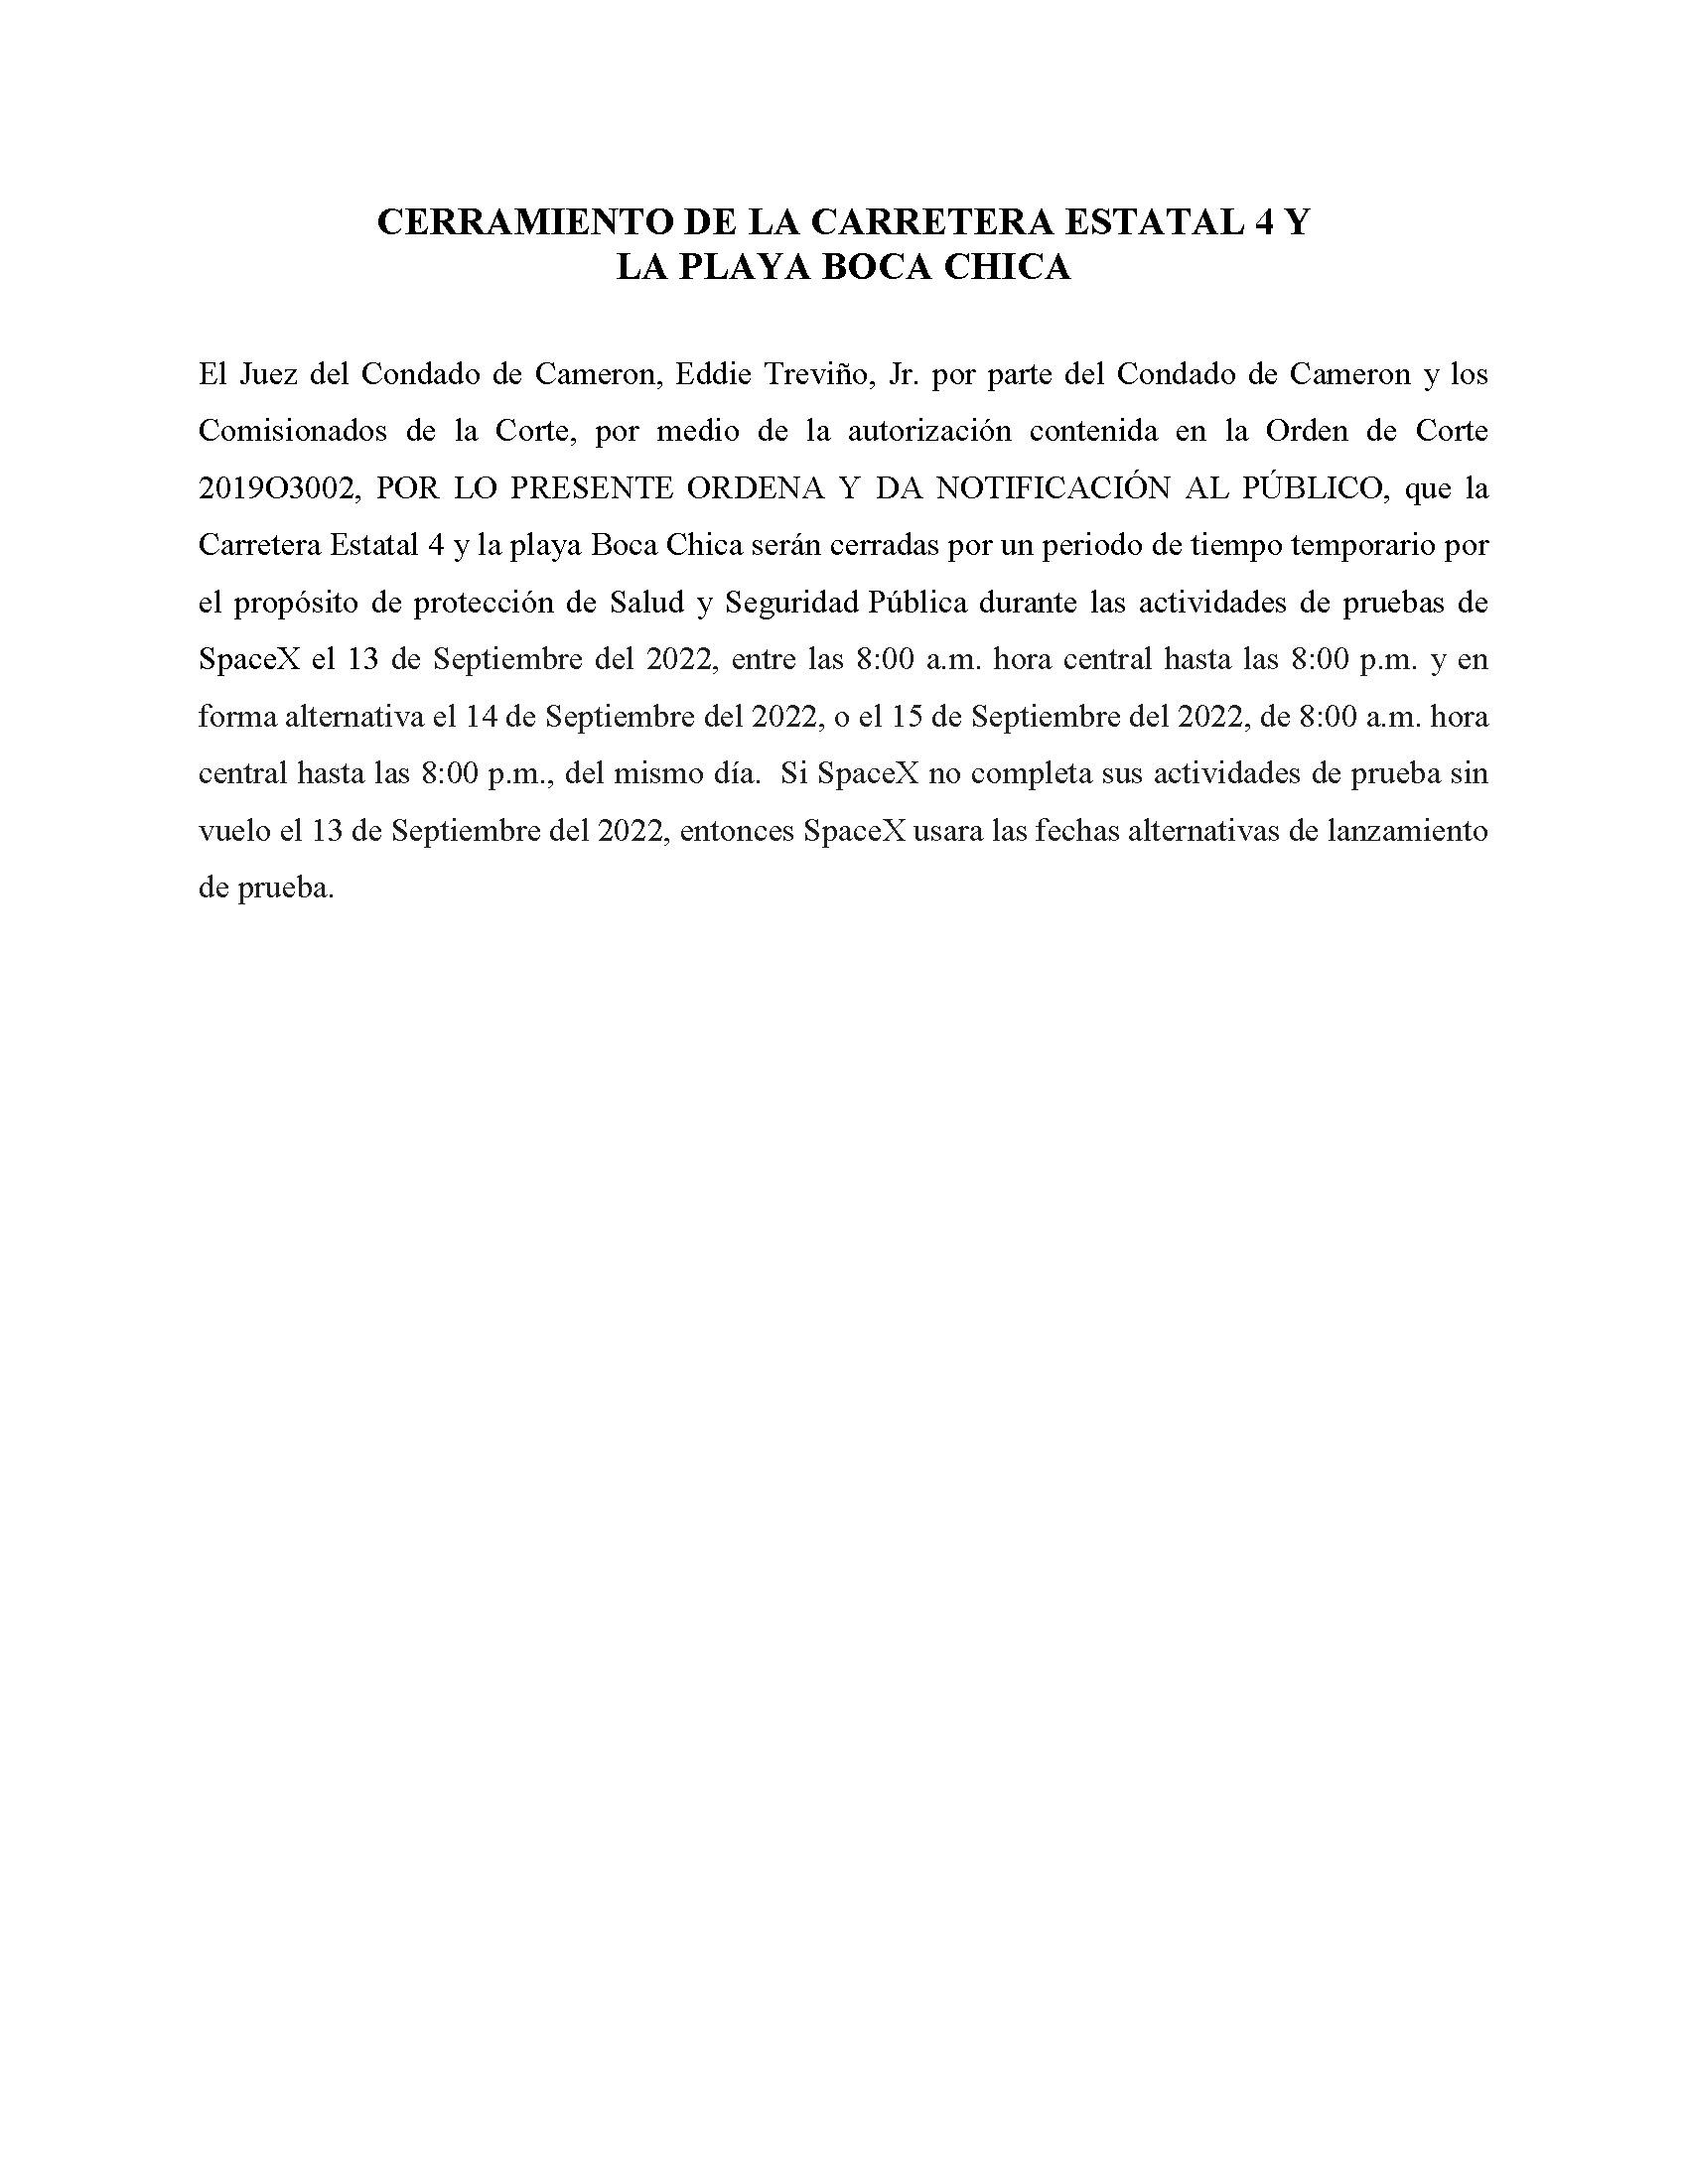 ORDER.CLOSURE OF HIGHWAY 4 Y LA PLAYA BOCA CHICA.SPANISH.09.13.2022